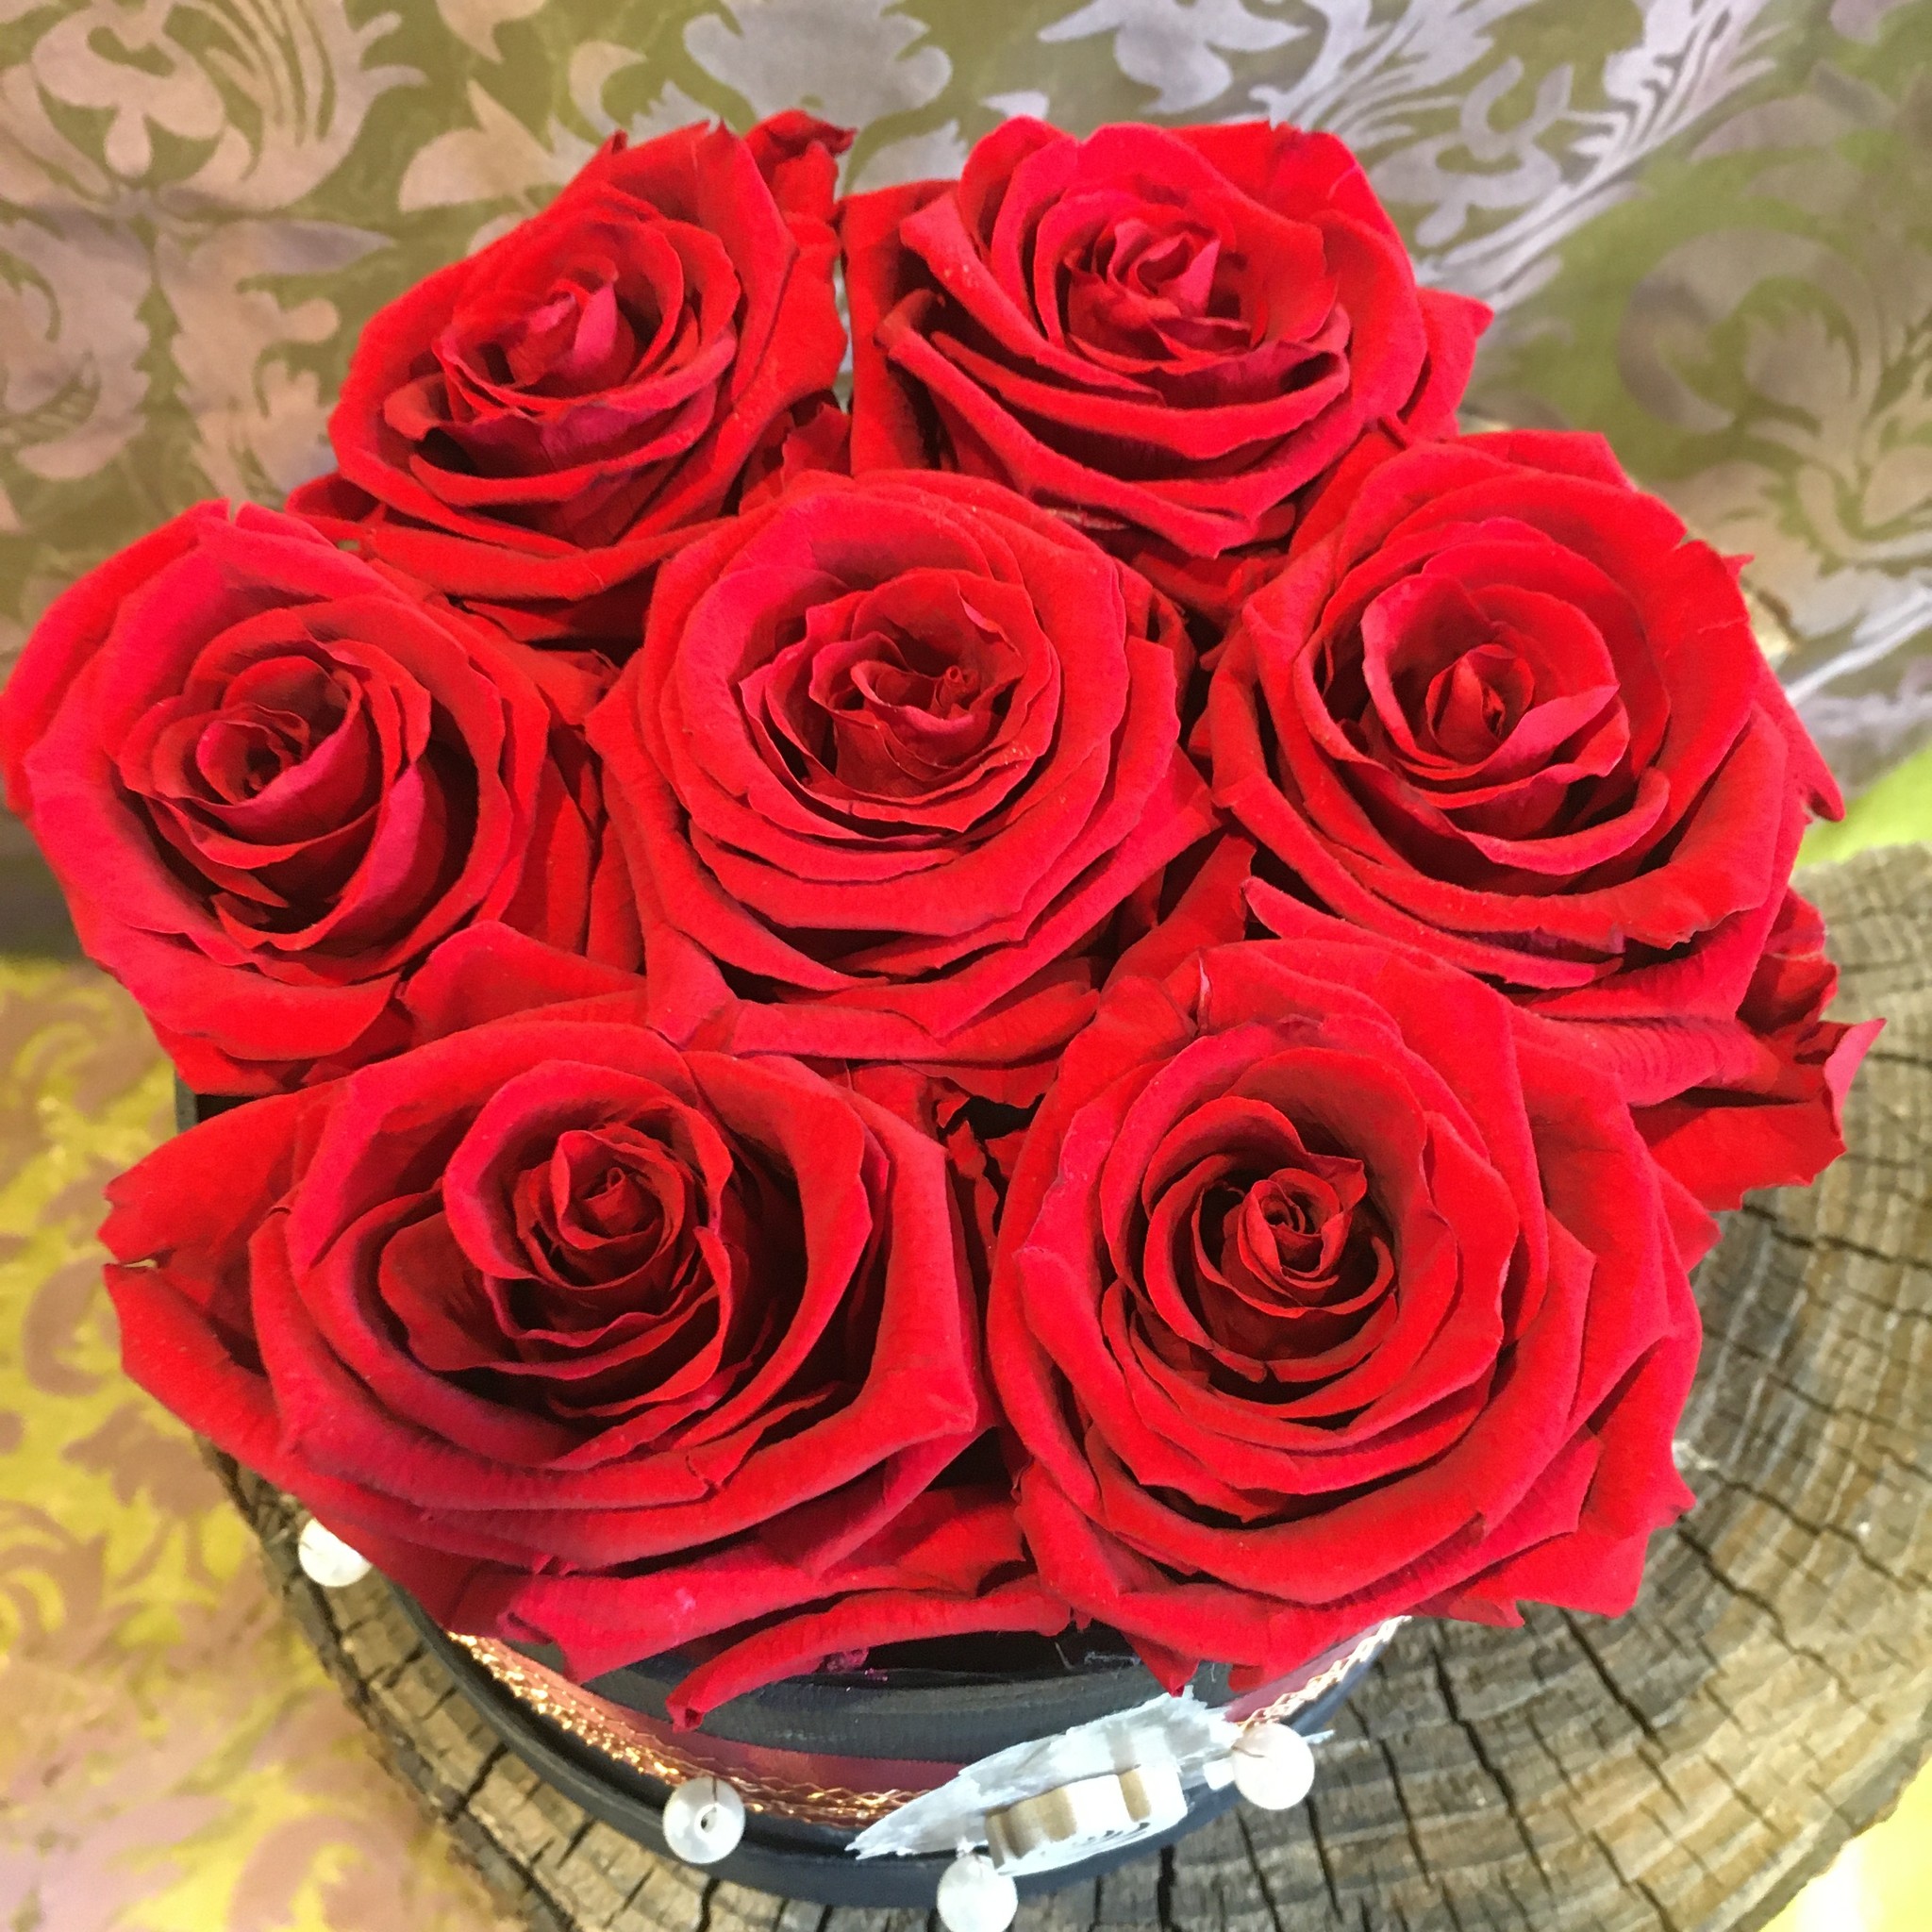 Rosenbox medium mit 7 roten Infinity Rosen